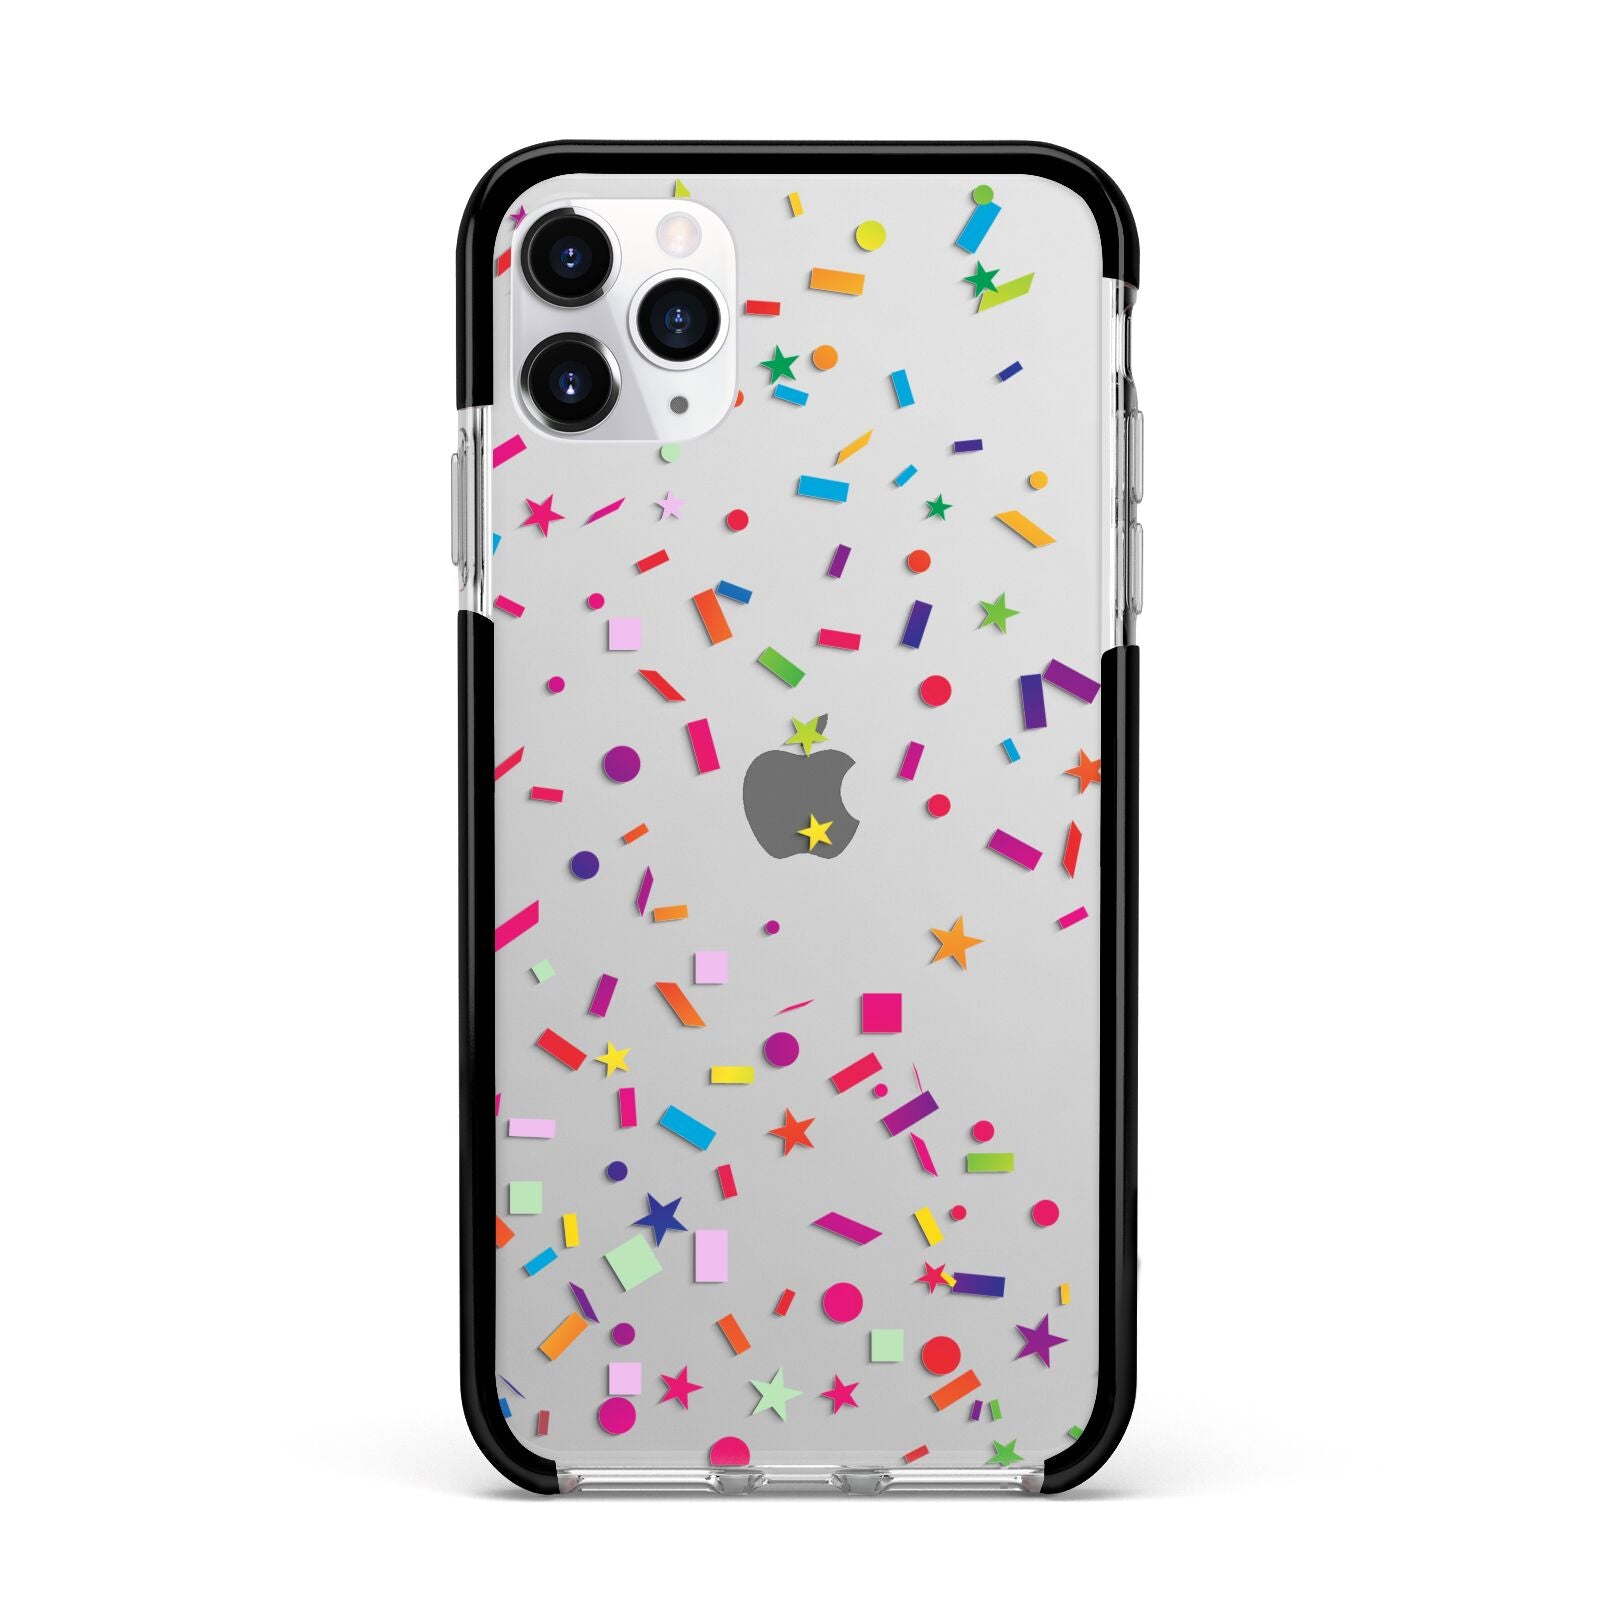 Confetti Apple iPhone 11 Pro Max in Silver with Black Impact Case